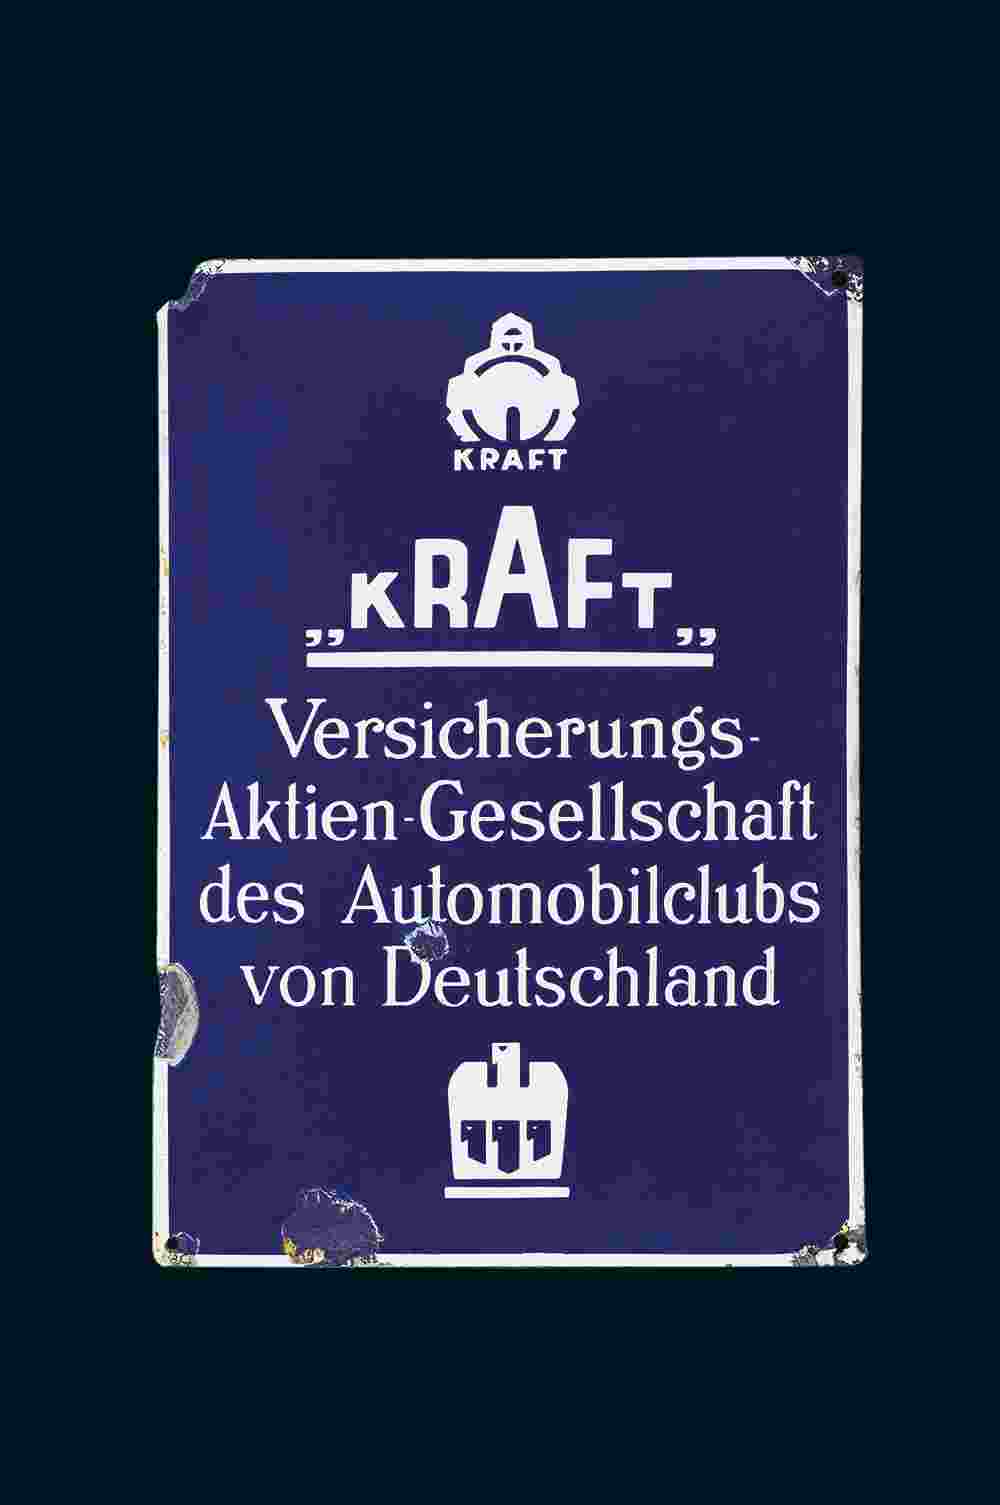 Kraft AvD 